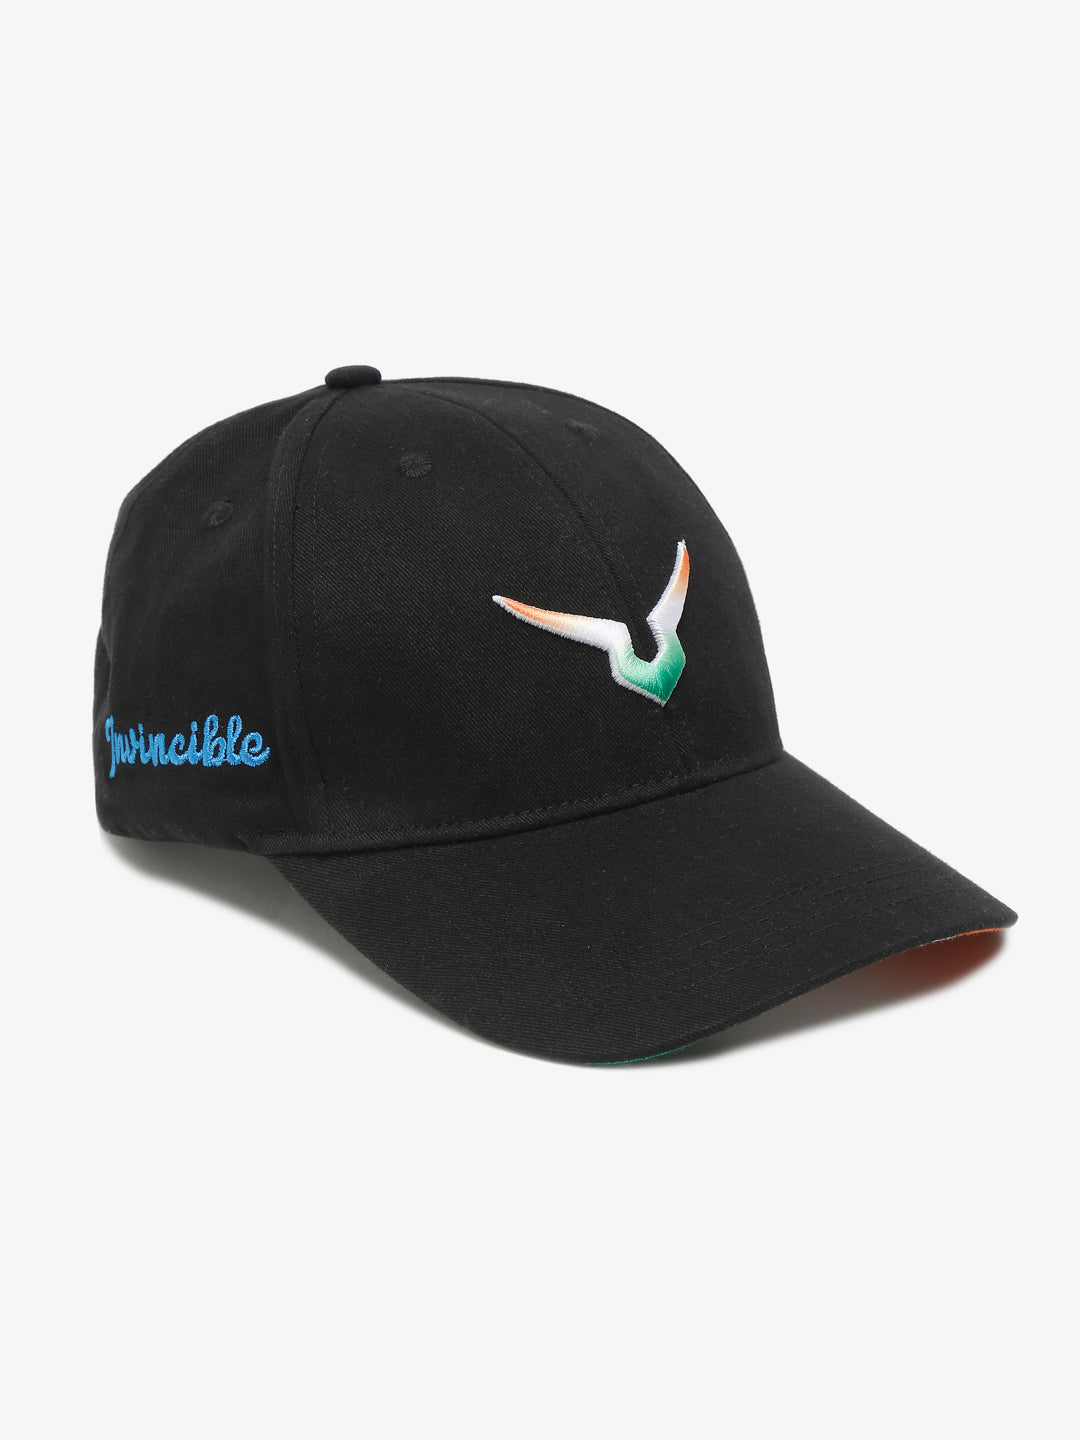 Invincible India Limited Edition Unisex Baseball Caps